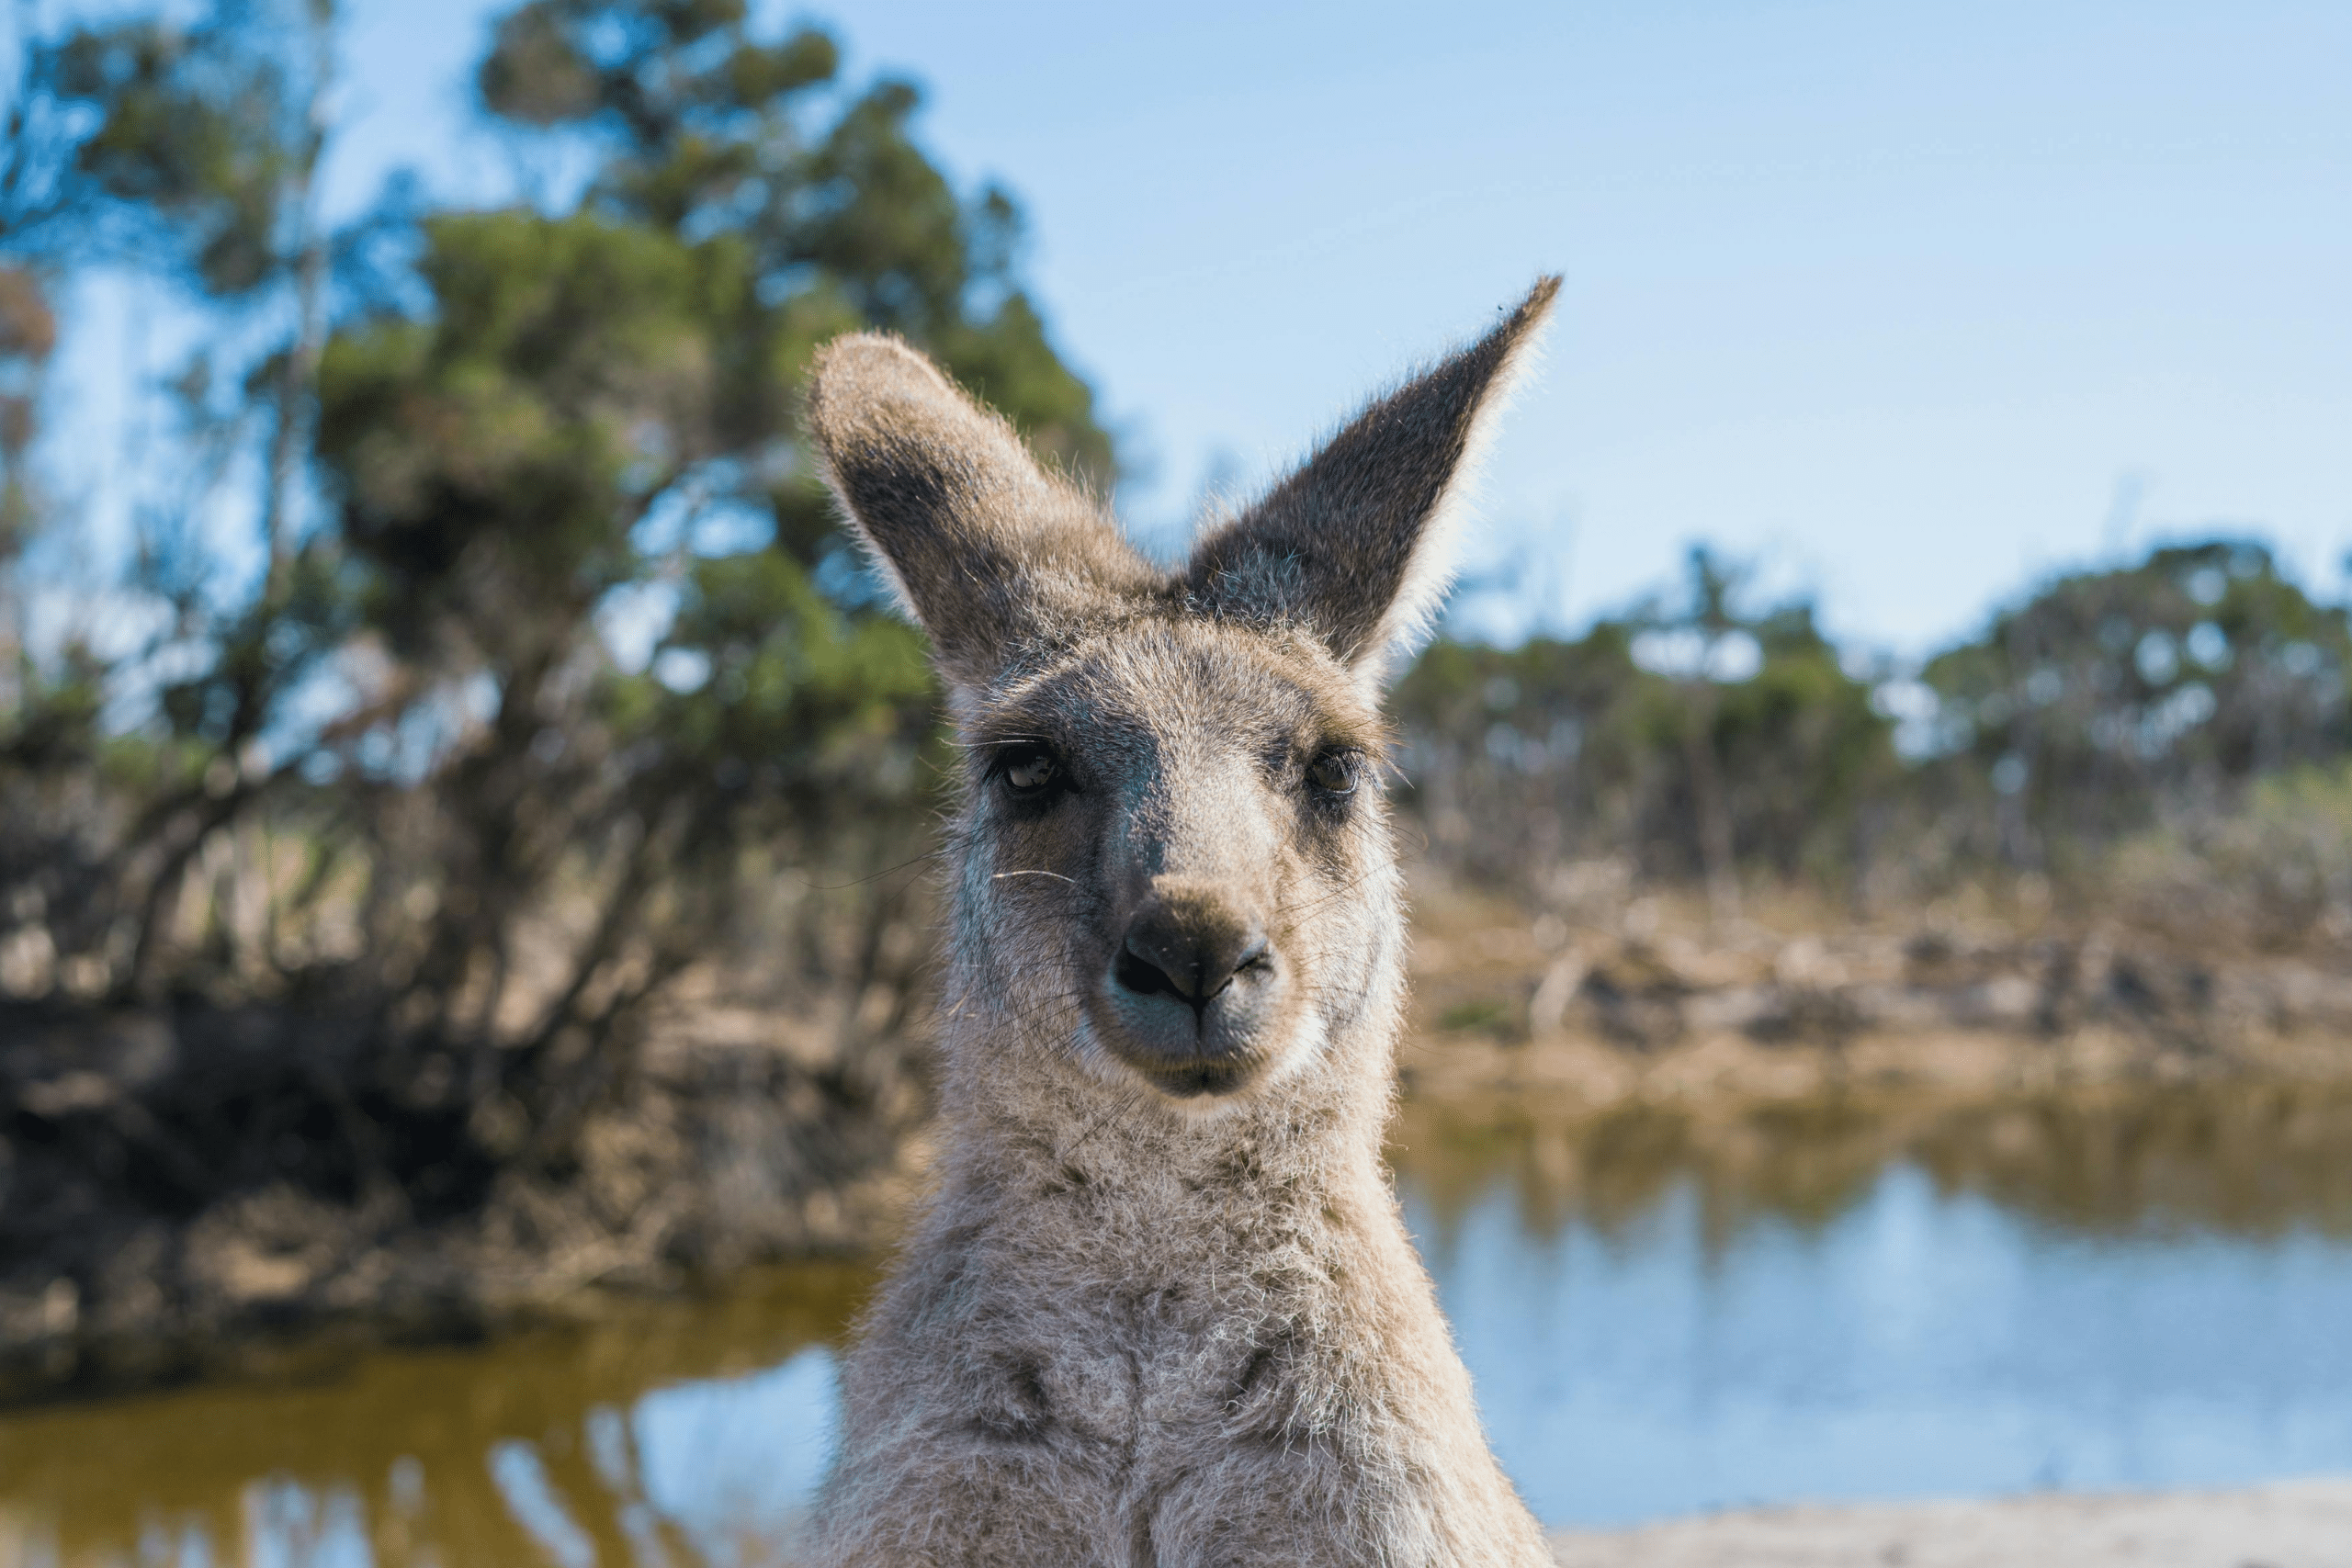 Working Holiday Australia: Work and Travel in Australia